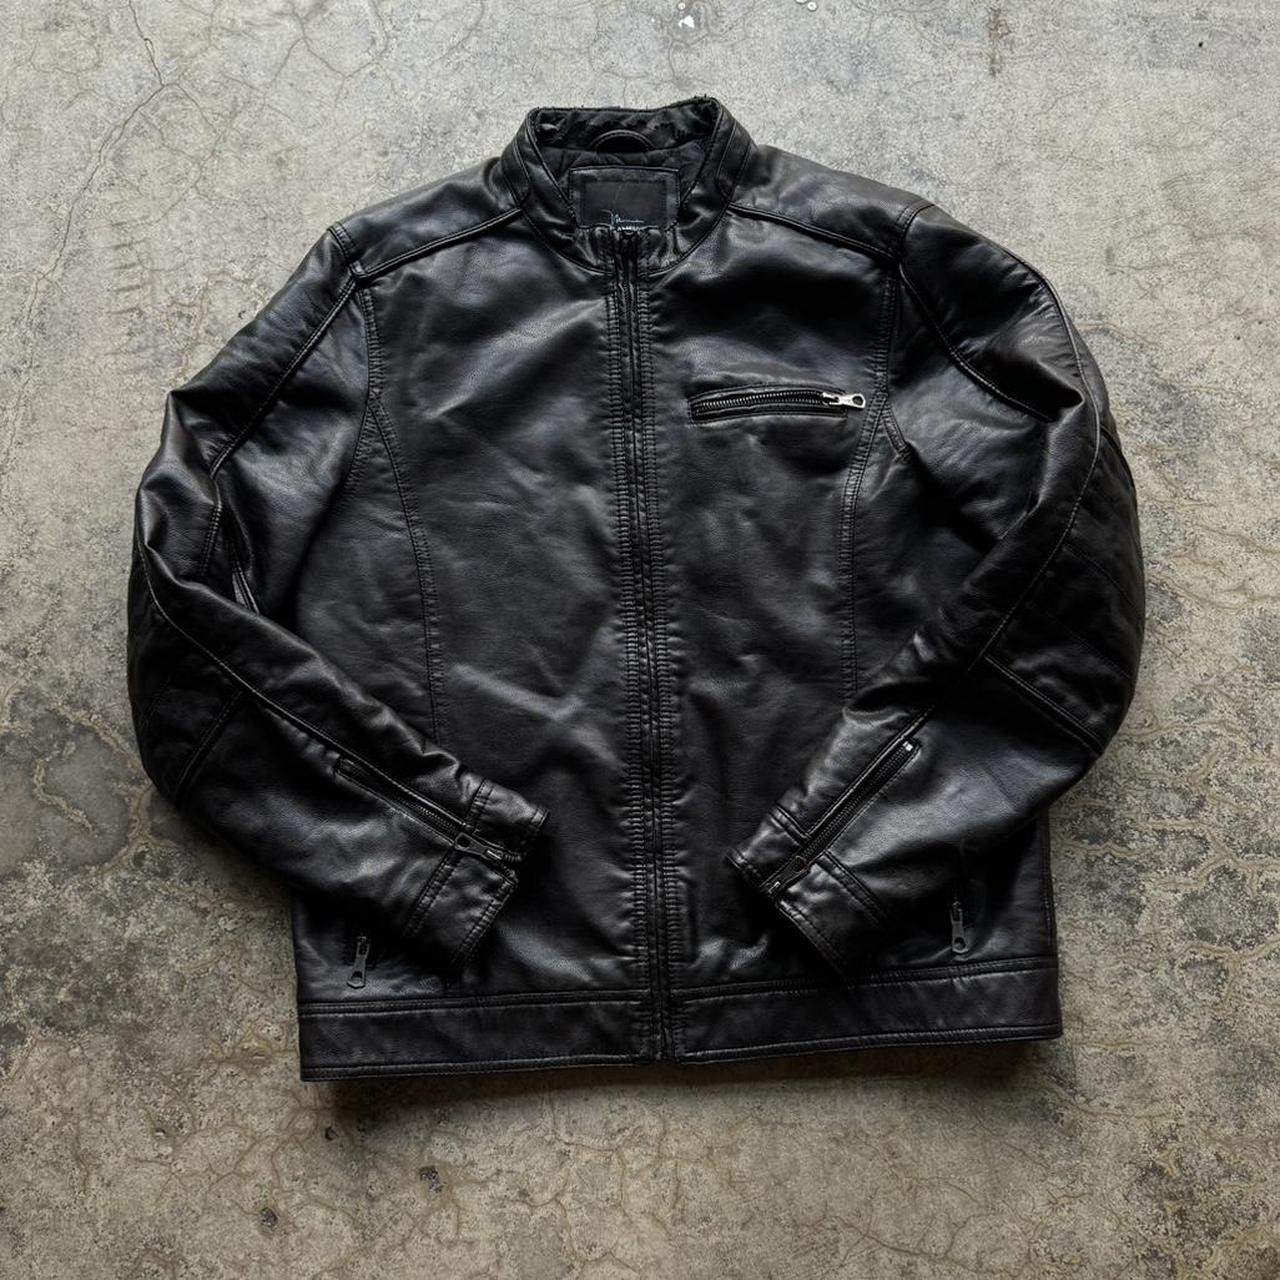 Vintage Libaire Black Leather Bag 90's Rare True - Depop